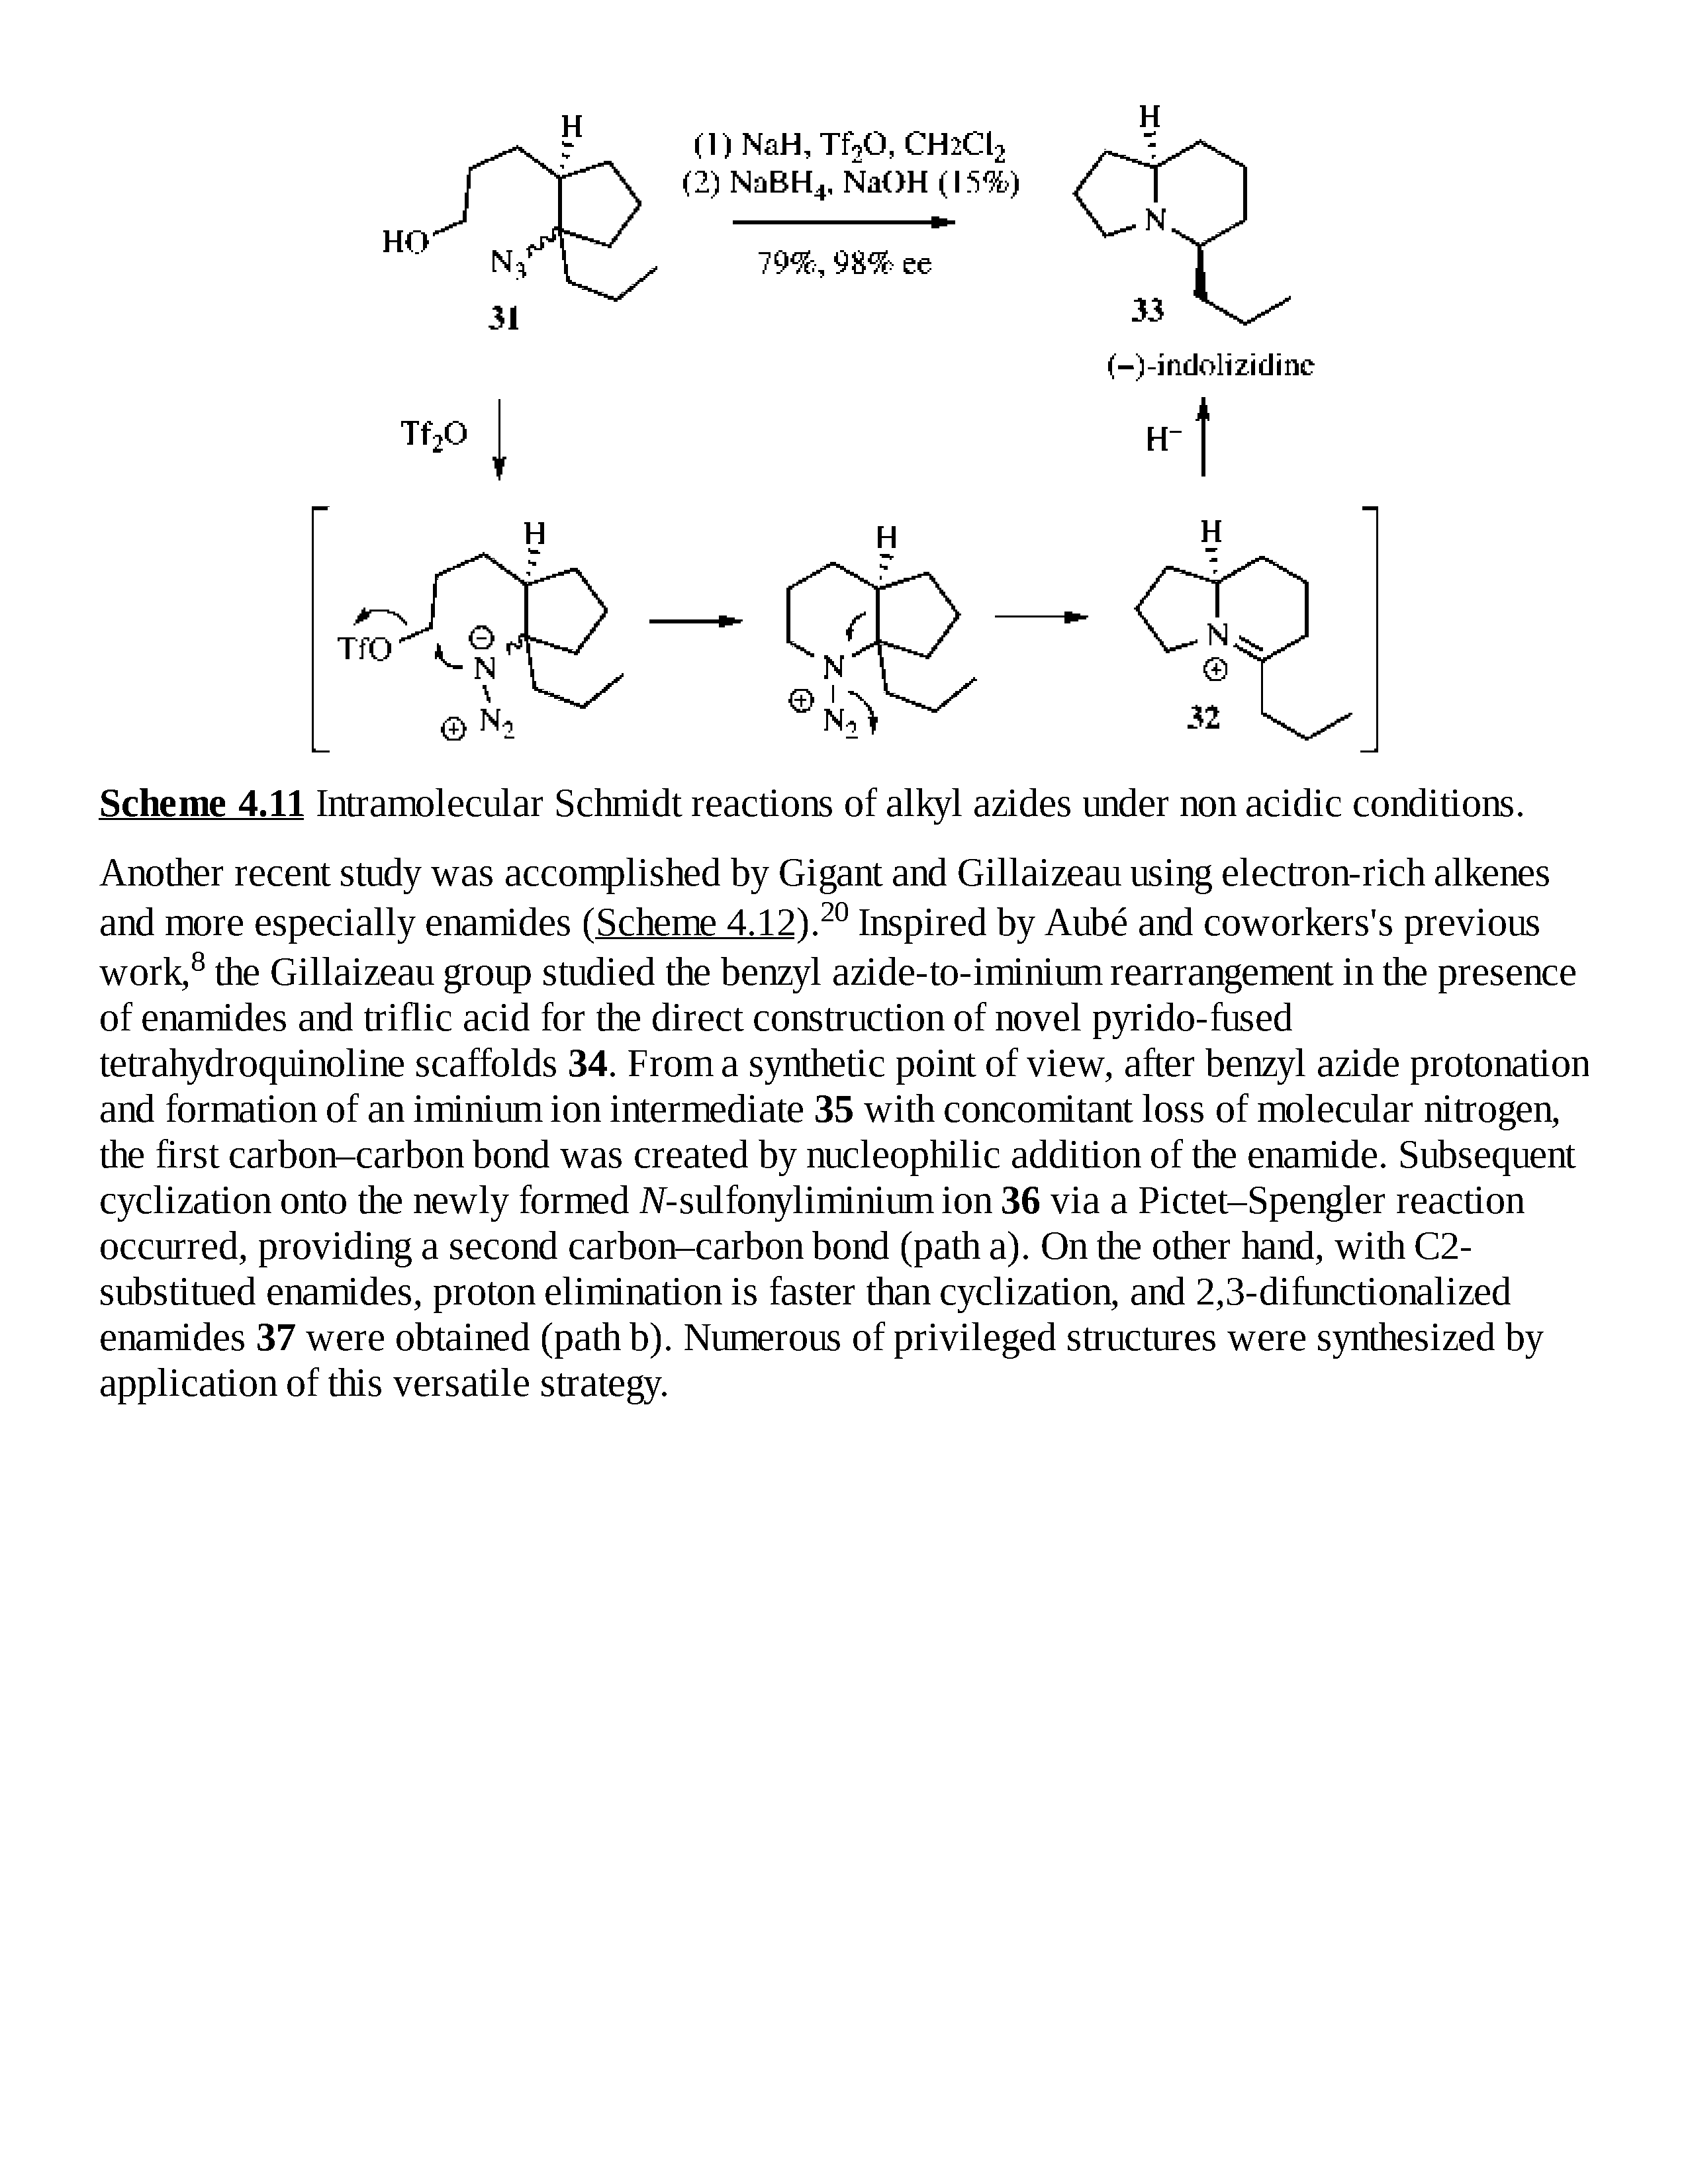 Scheme 4.11 Intramolecular Schmidt reactions of alkyl azides under non acidic conditions.